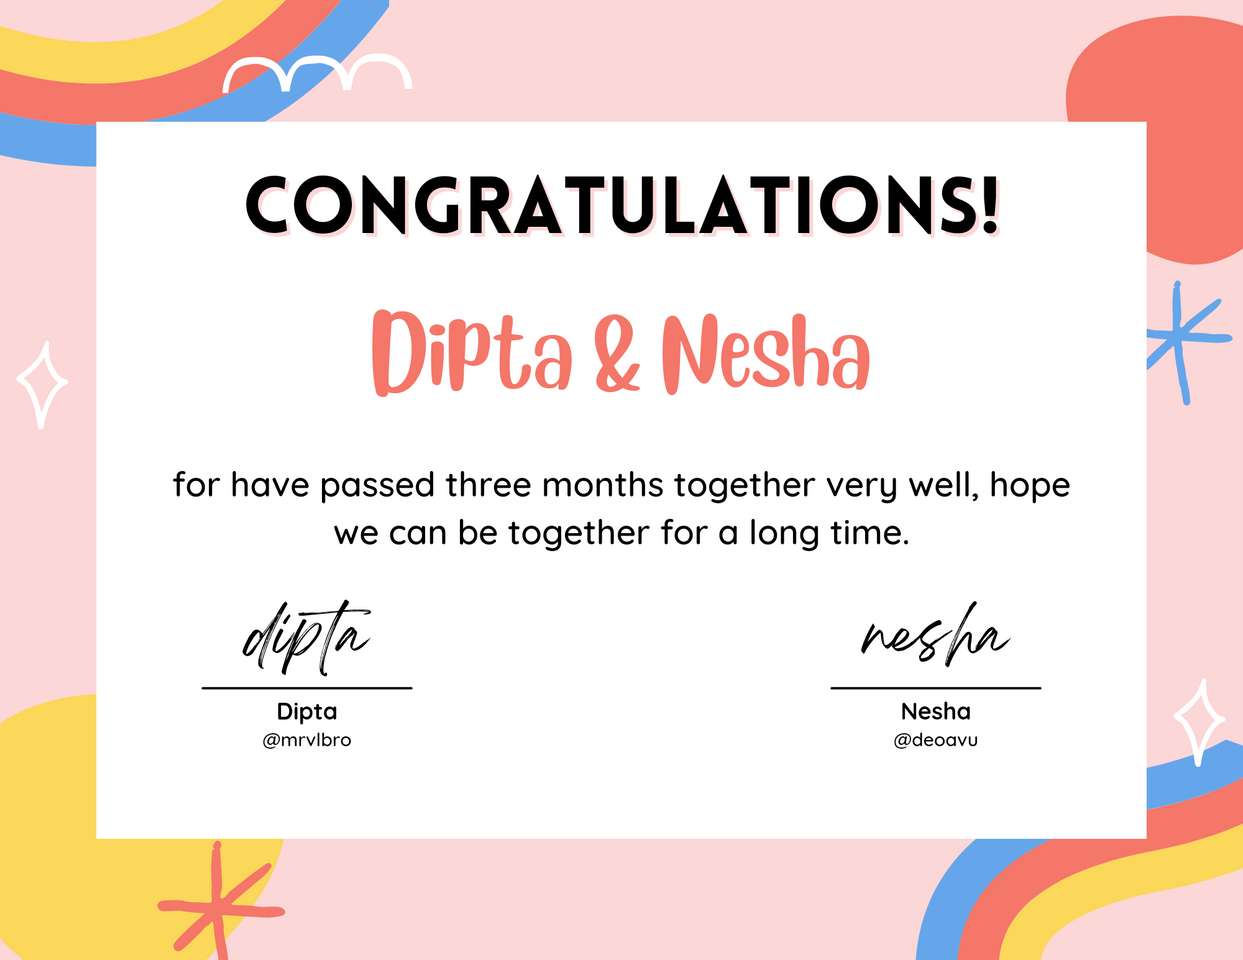 Dipta e Nesha puzzle online a partir de fotografia